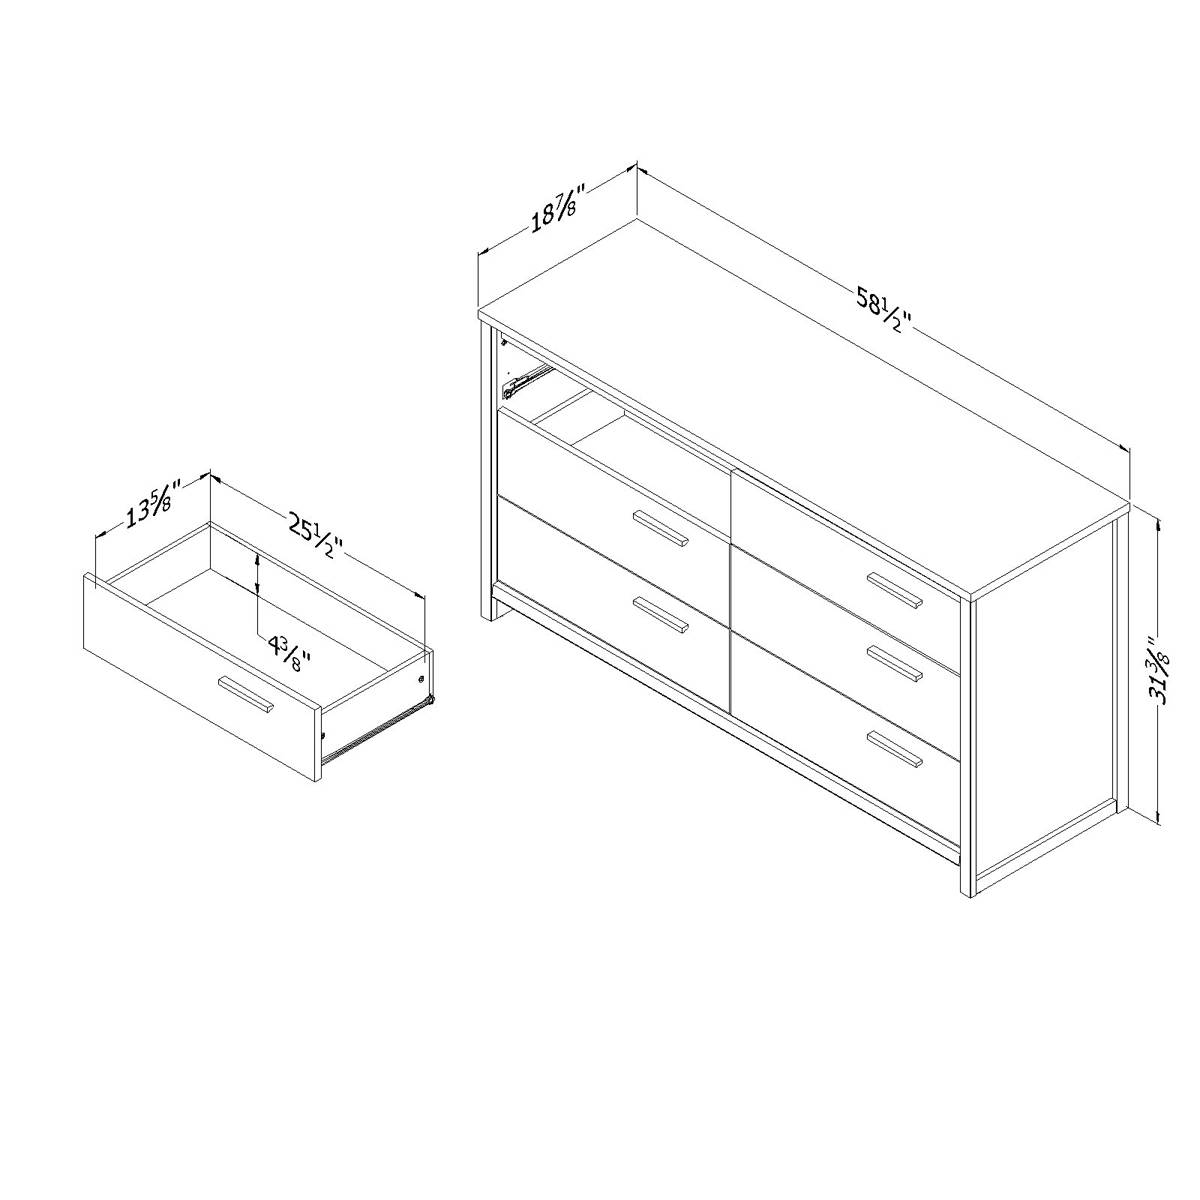 South Shore Lensky Grey Oak 6-Drawer Double Dresser